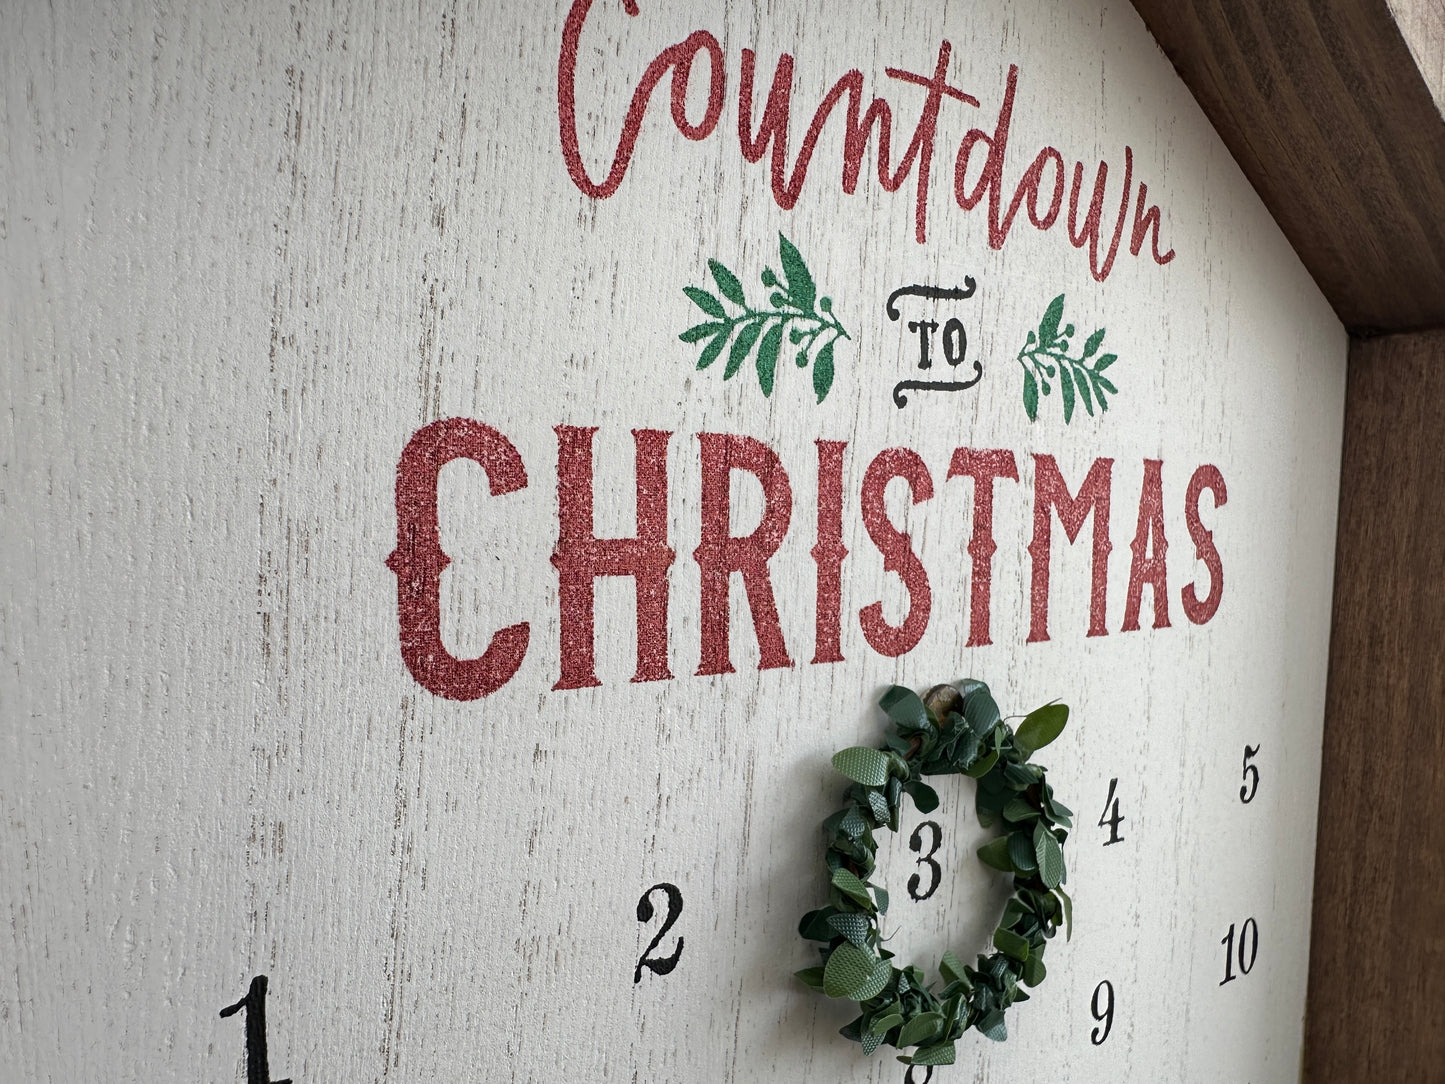 House Shaped Christmas Countdown